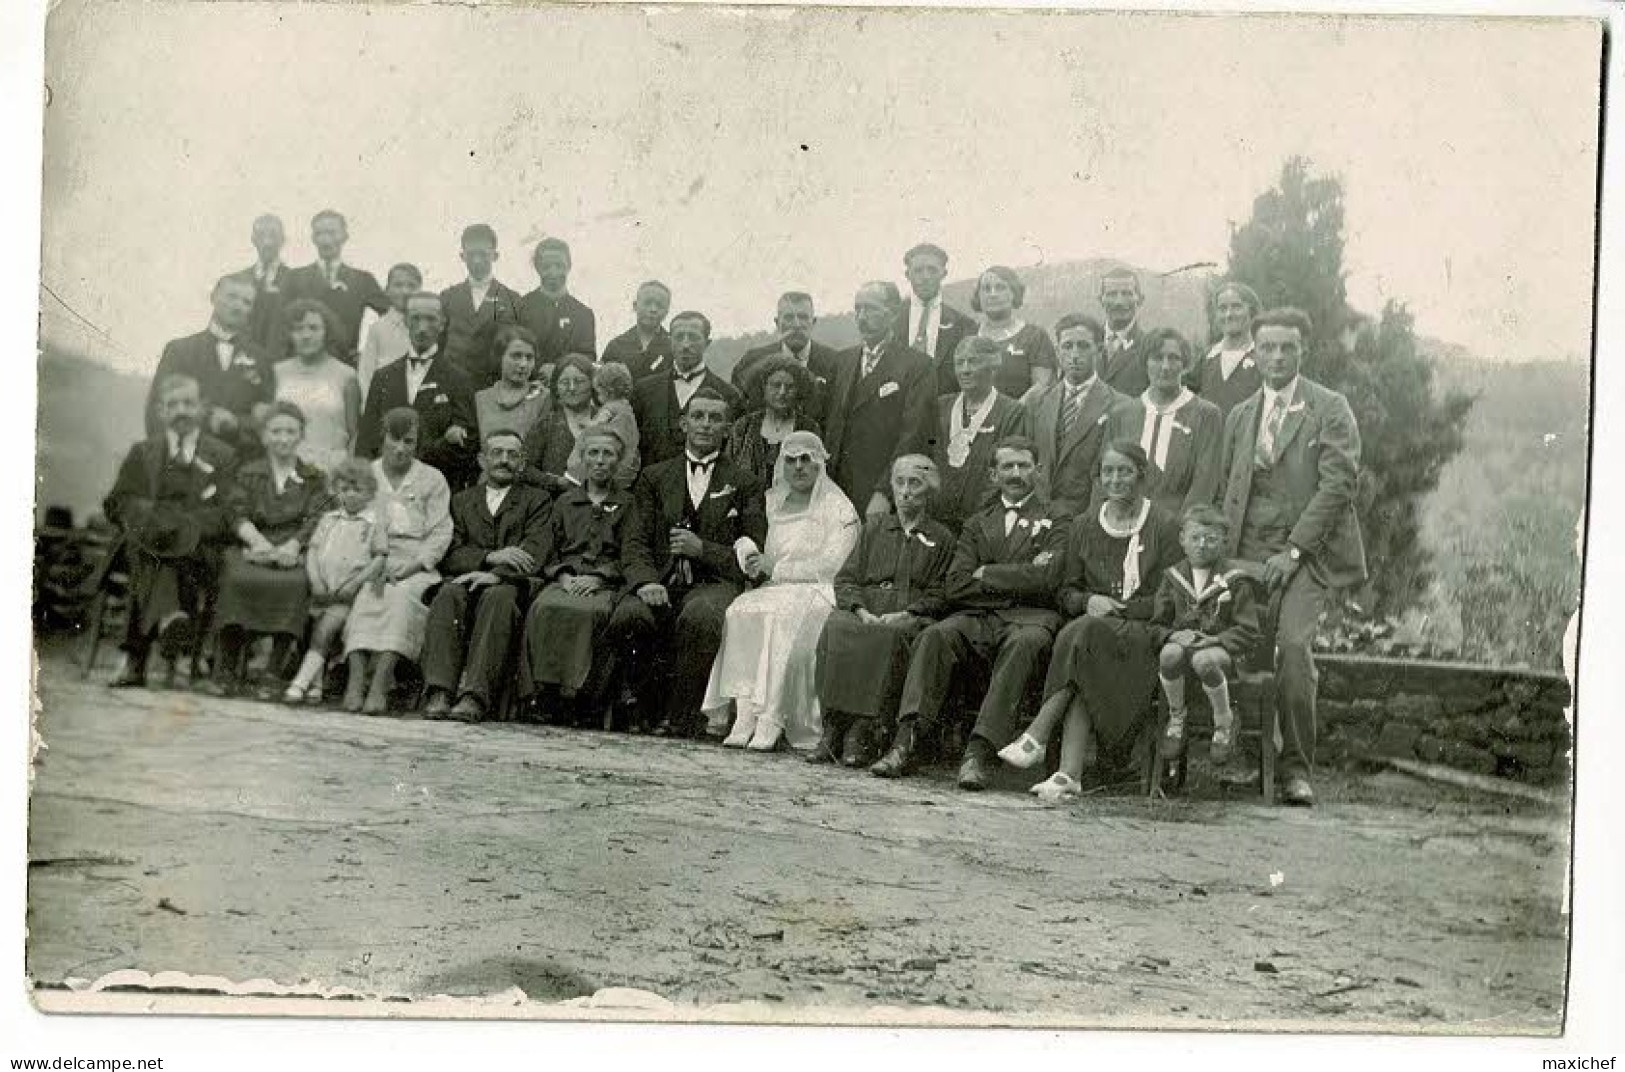 Carte Photo - Famille Mas-Coustaury - Mariage Oncle Albert Et Tante Olga - 1931 - Généalogie